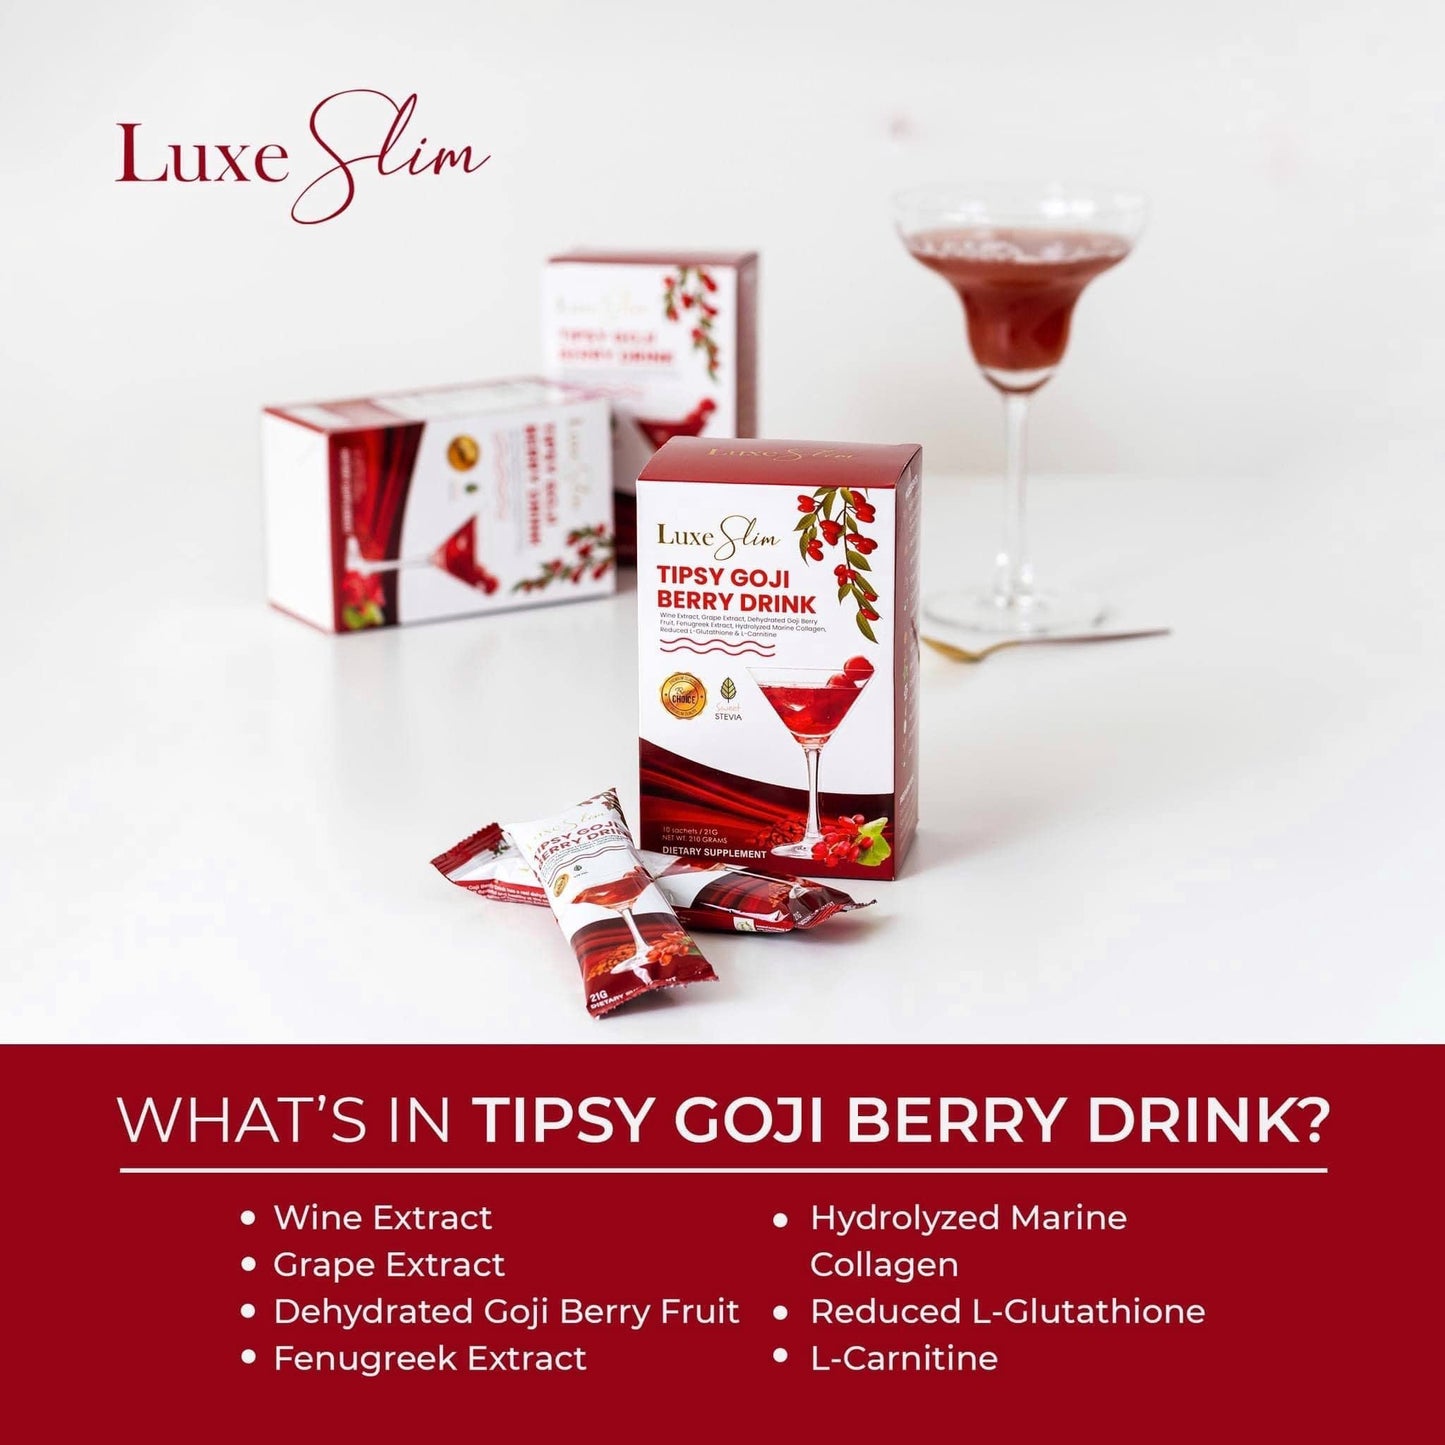 Luxe Slim - Tipsy Goji Berry